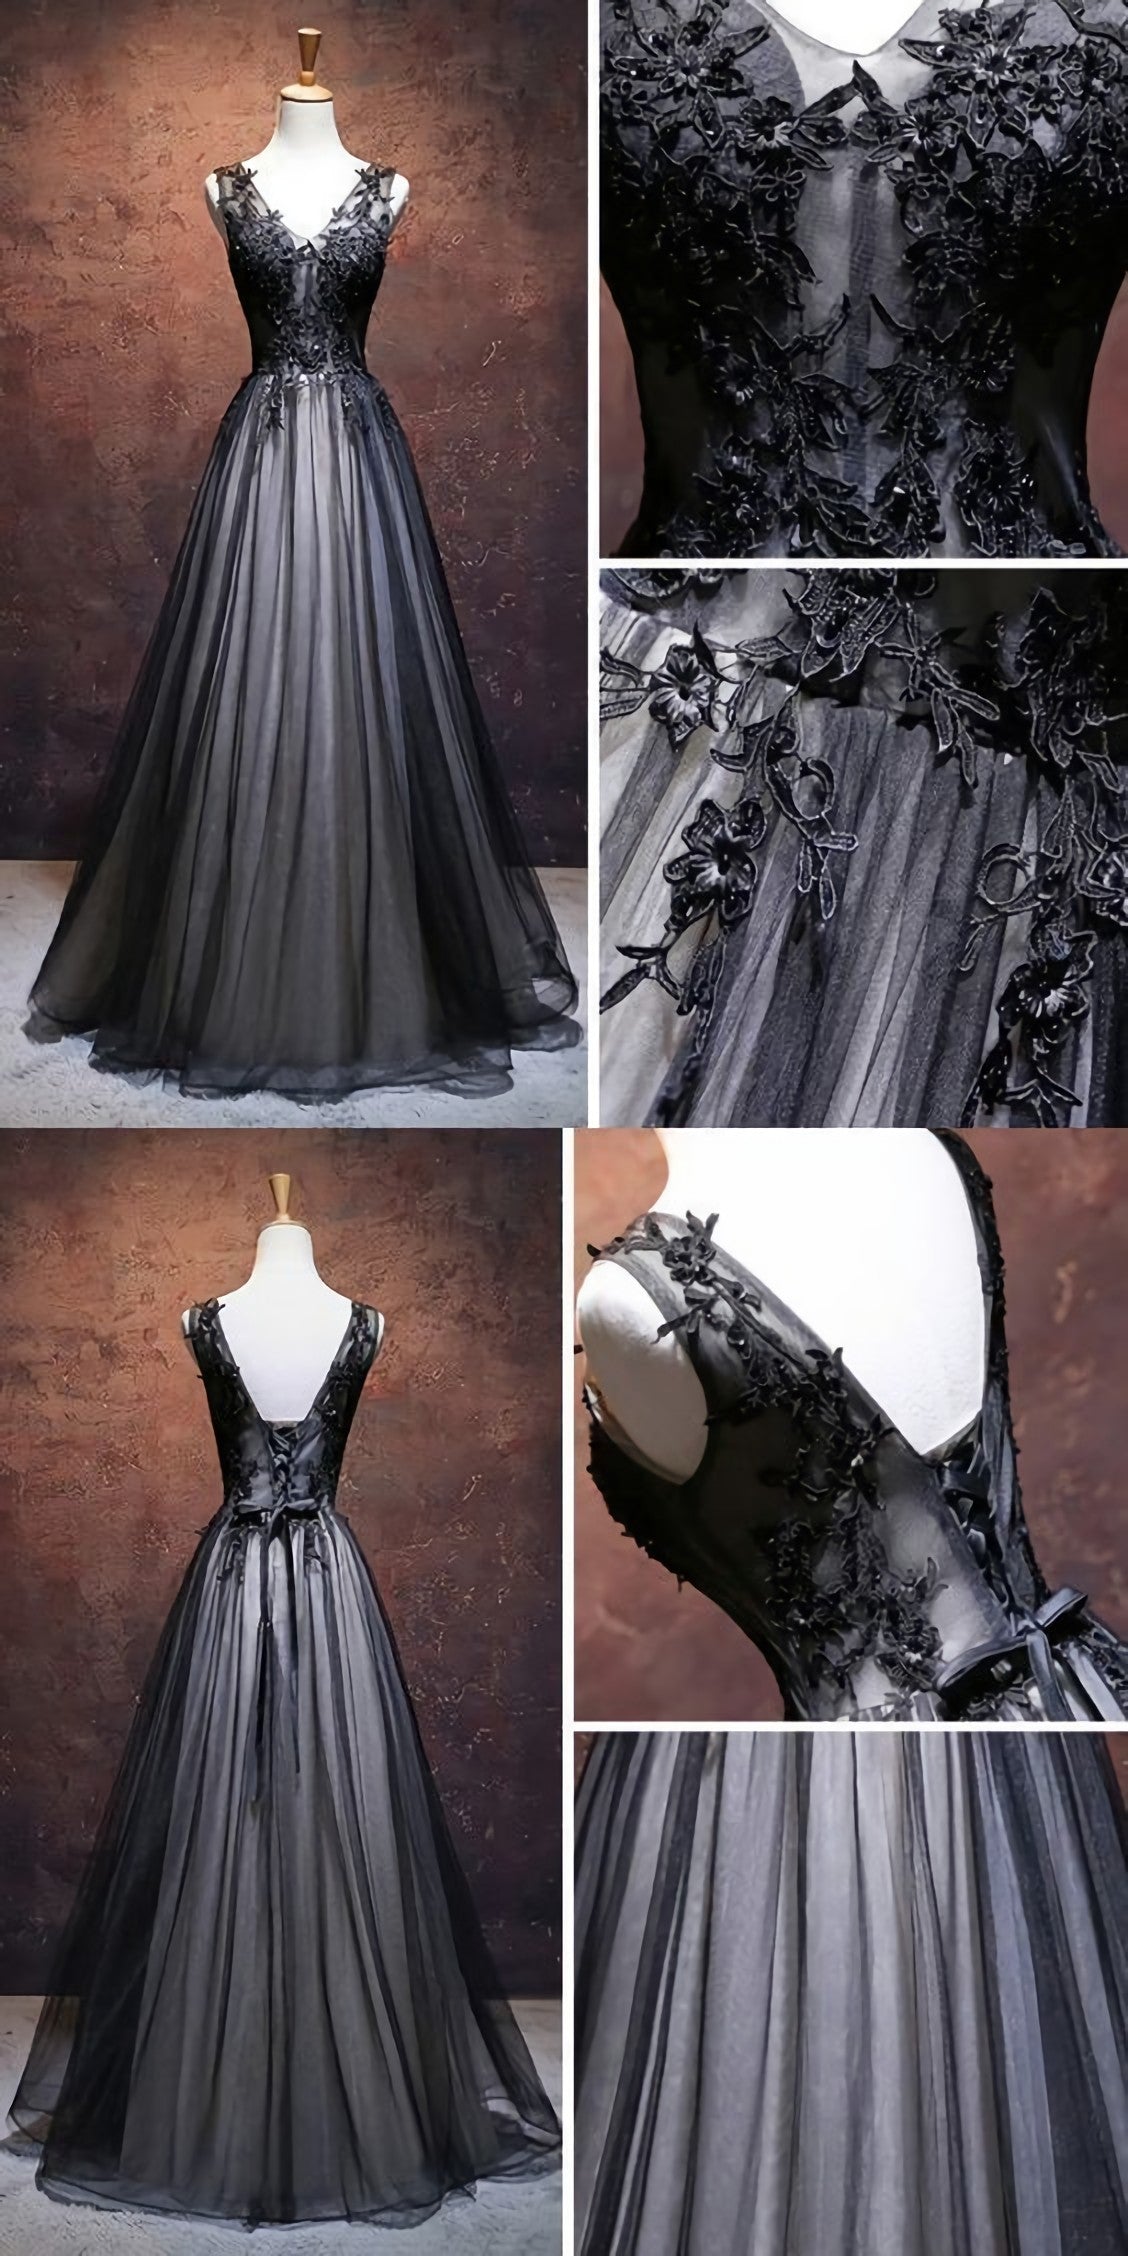 Chic A Line V Neck Floor Length Tulle Black Applique Long Corset Prom Dress, Evening Dress outfit, Prom Dress Design